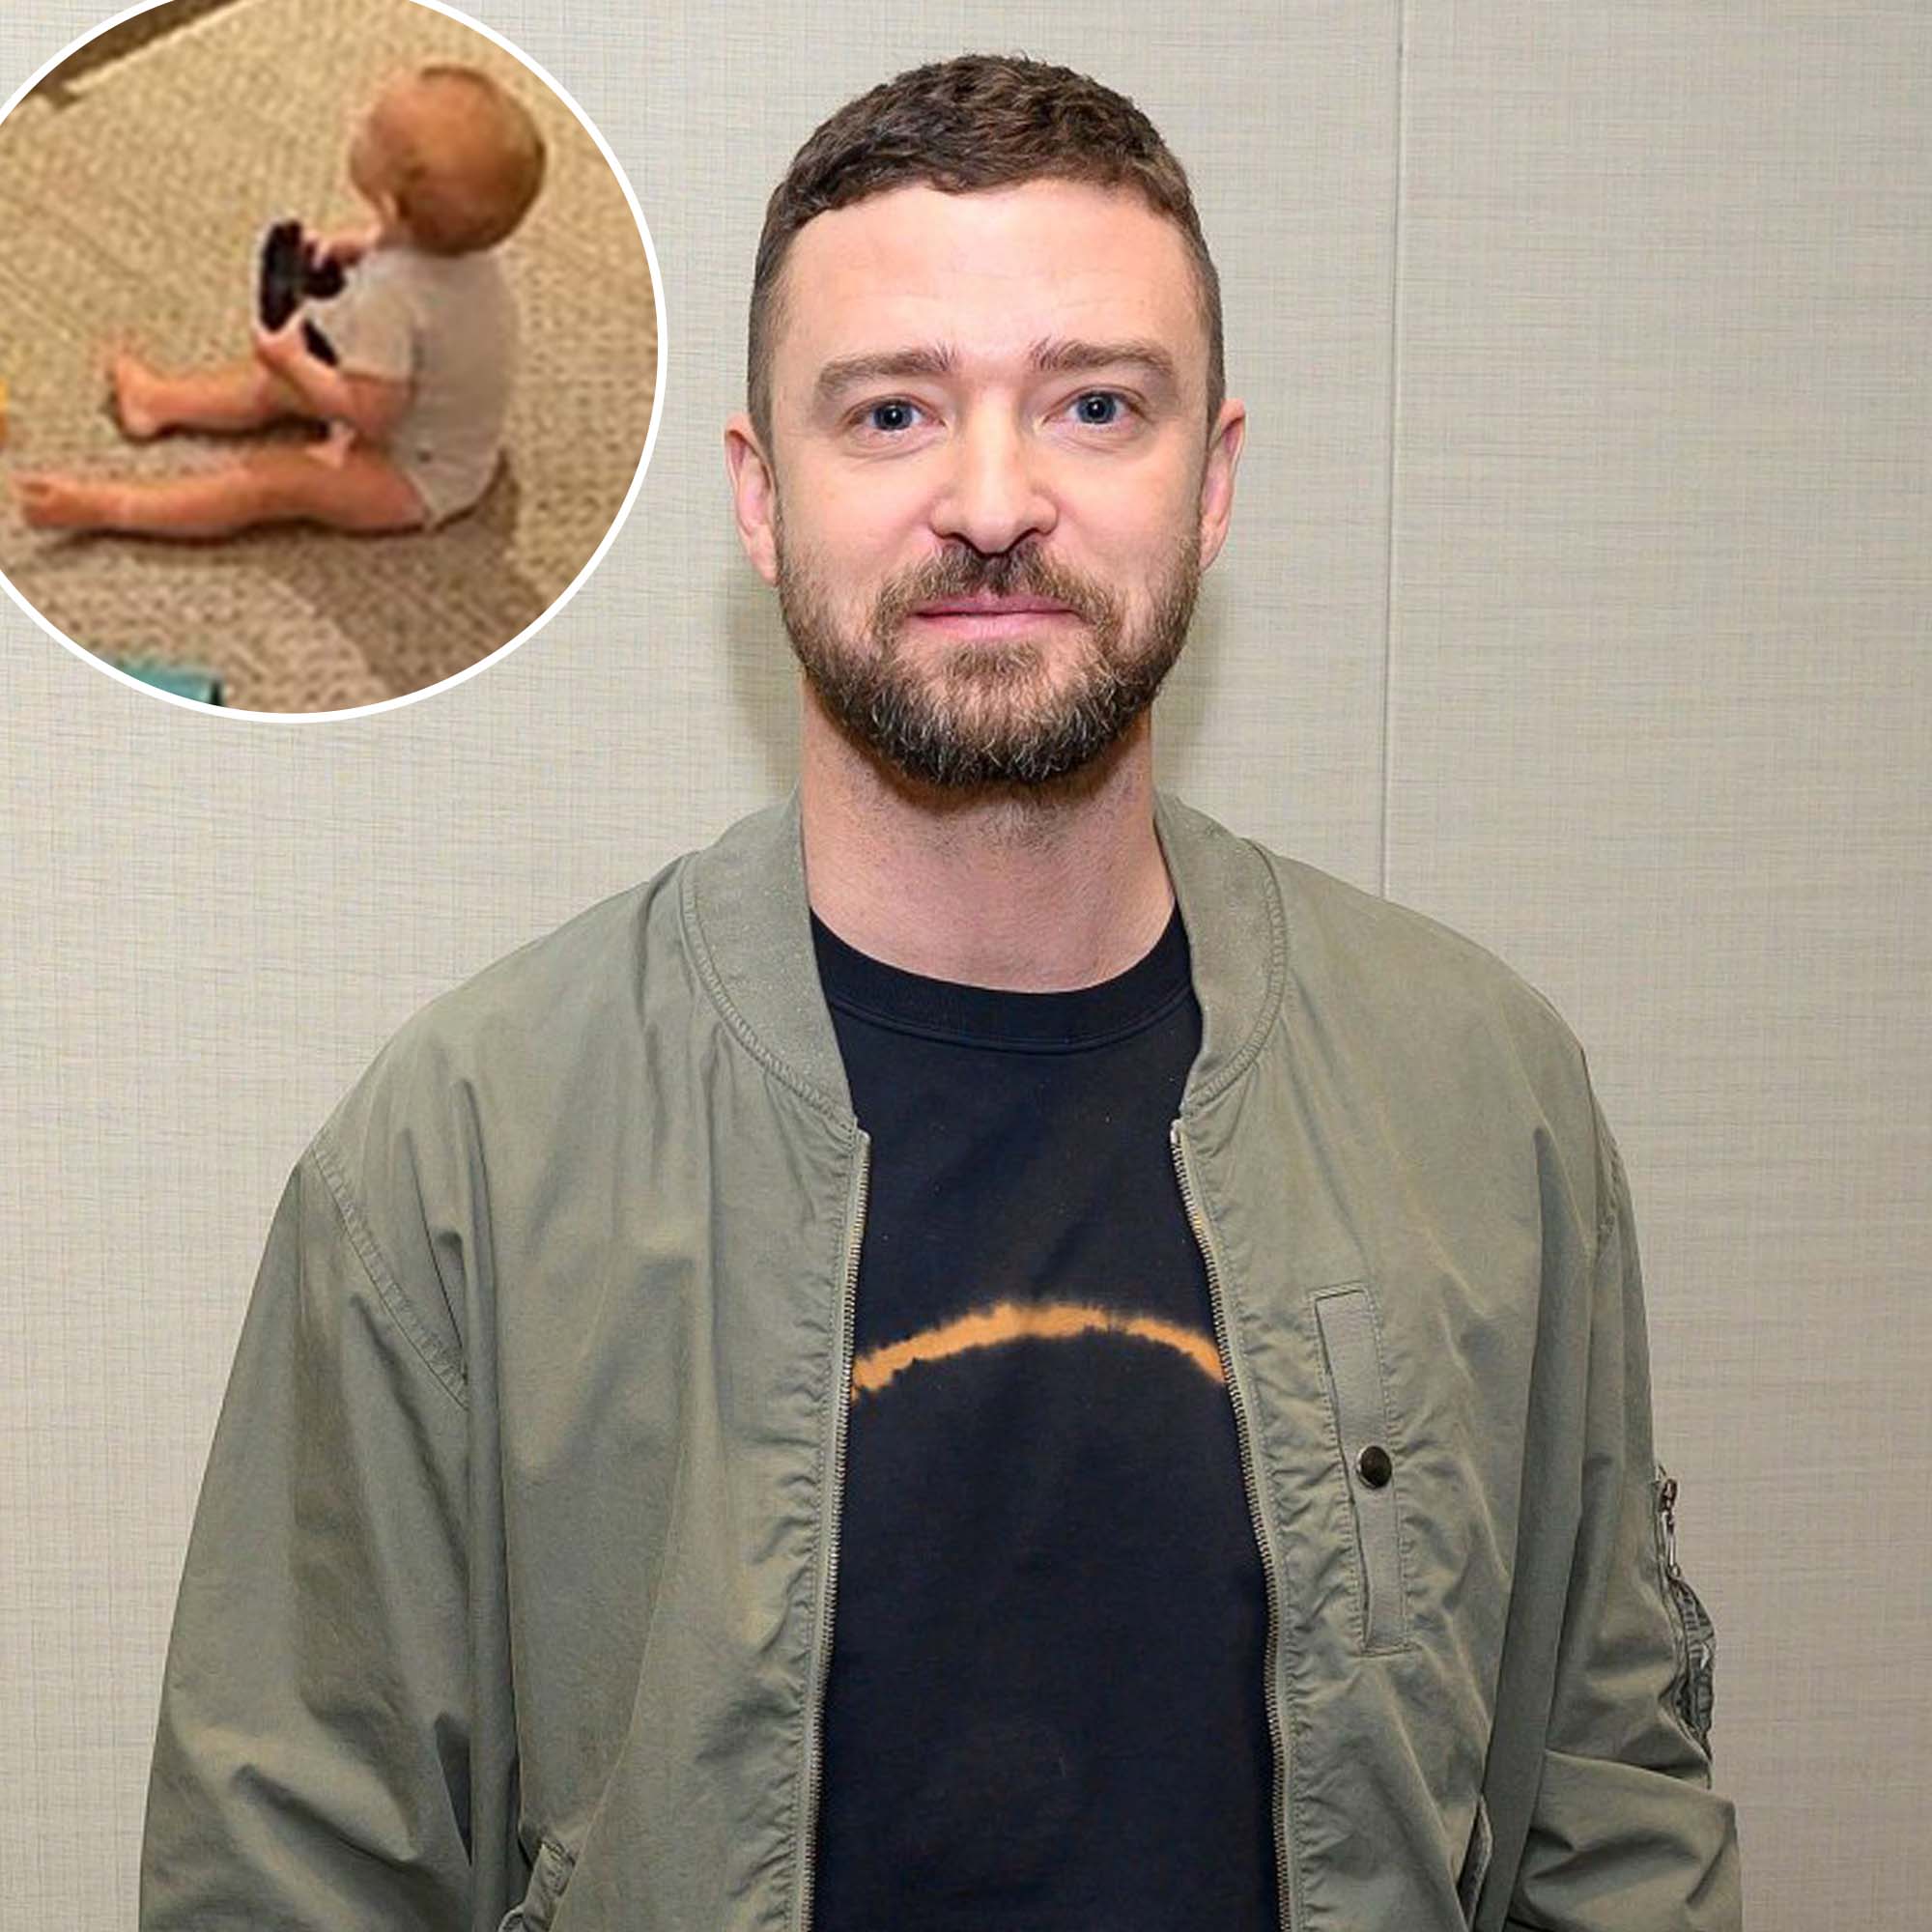 Justin Timberlake May Have Just Shared a Rare Photo of His Son